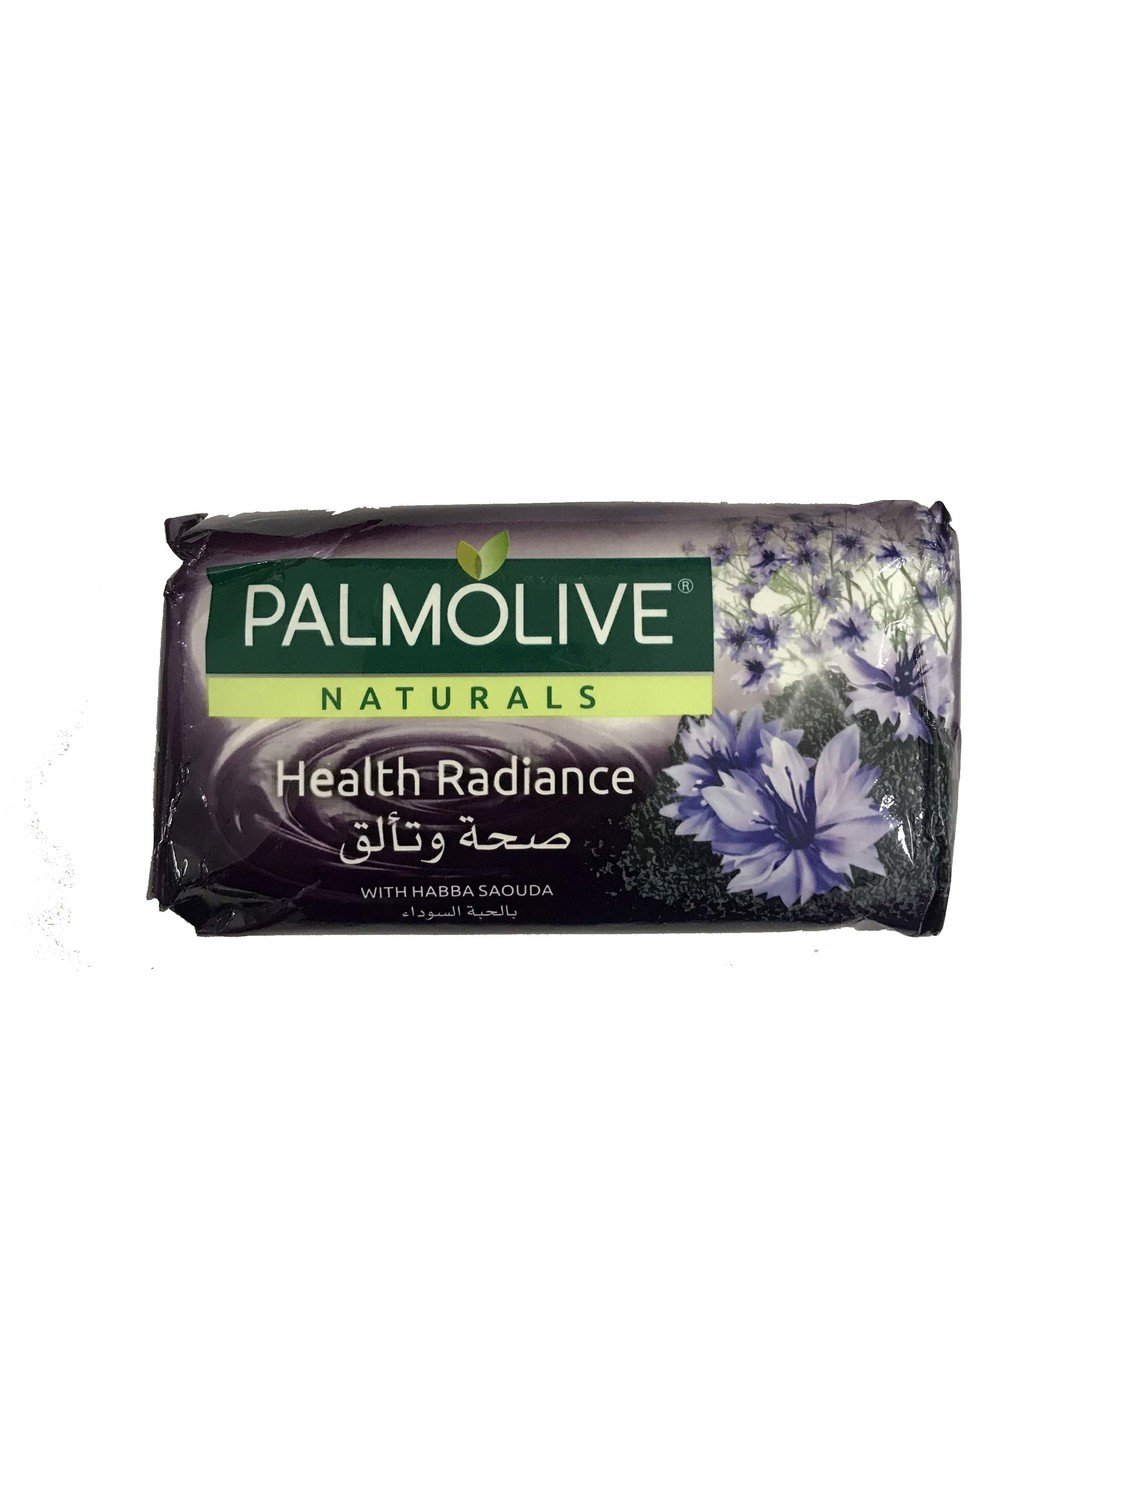 Palmolive Health Radiance with Habba Saqouda 170g